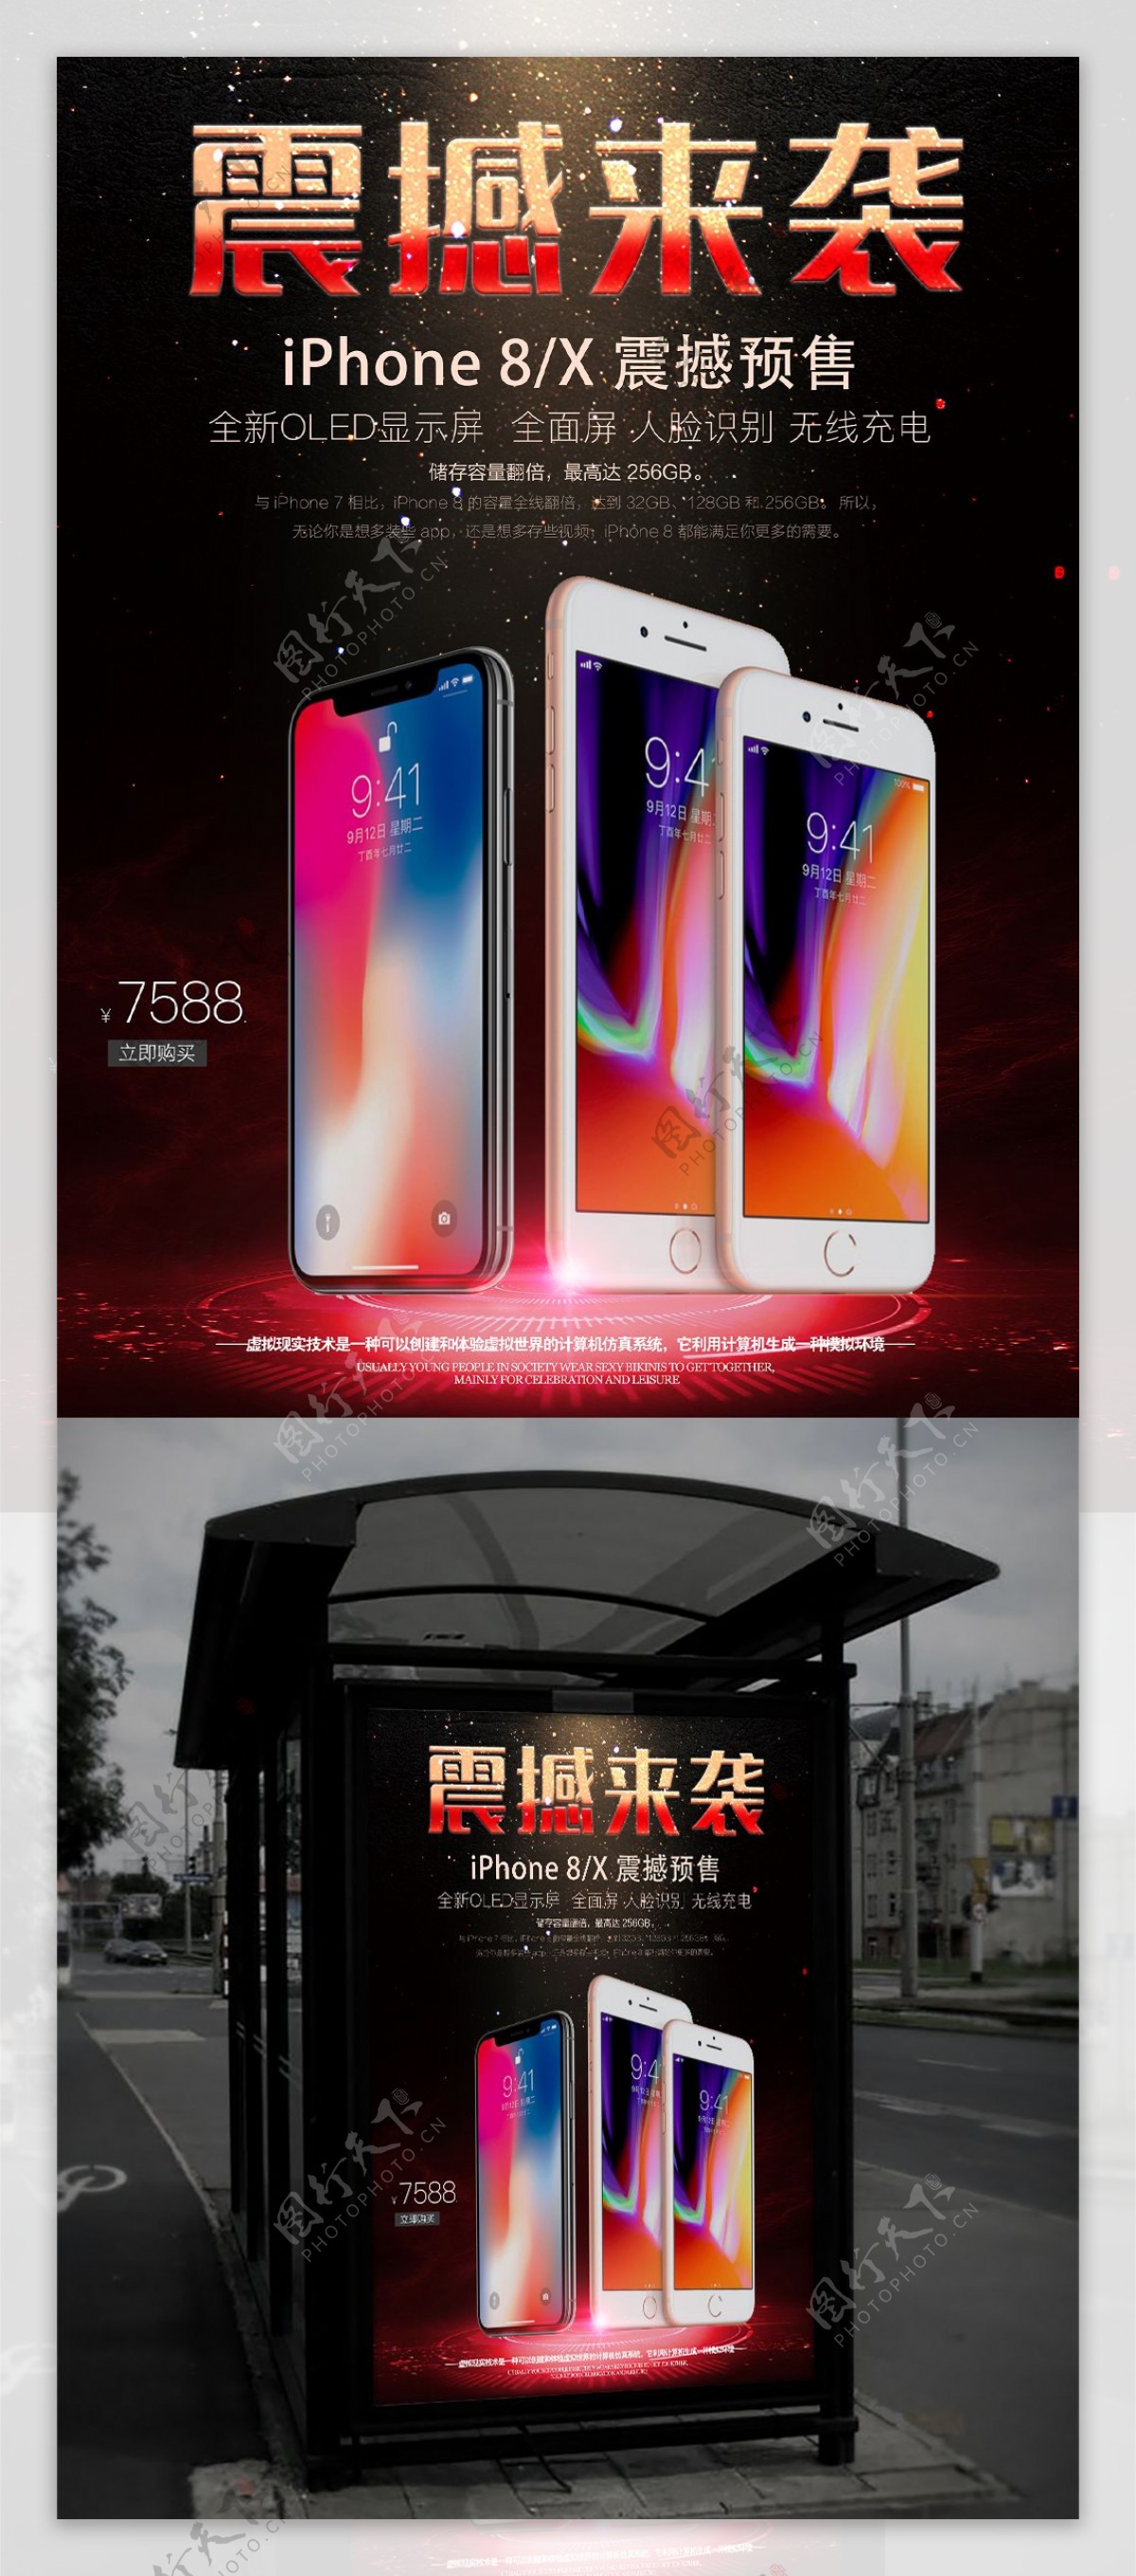 iPhone8iPhoneX苹果促销海报